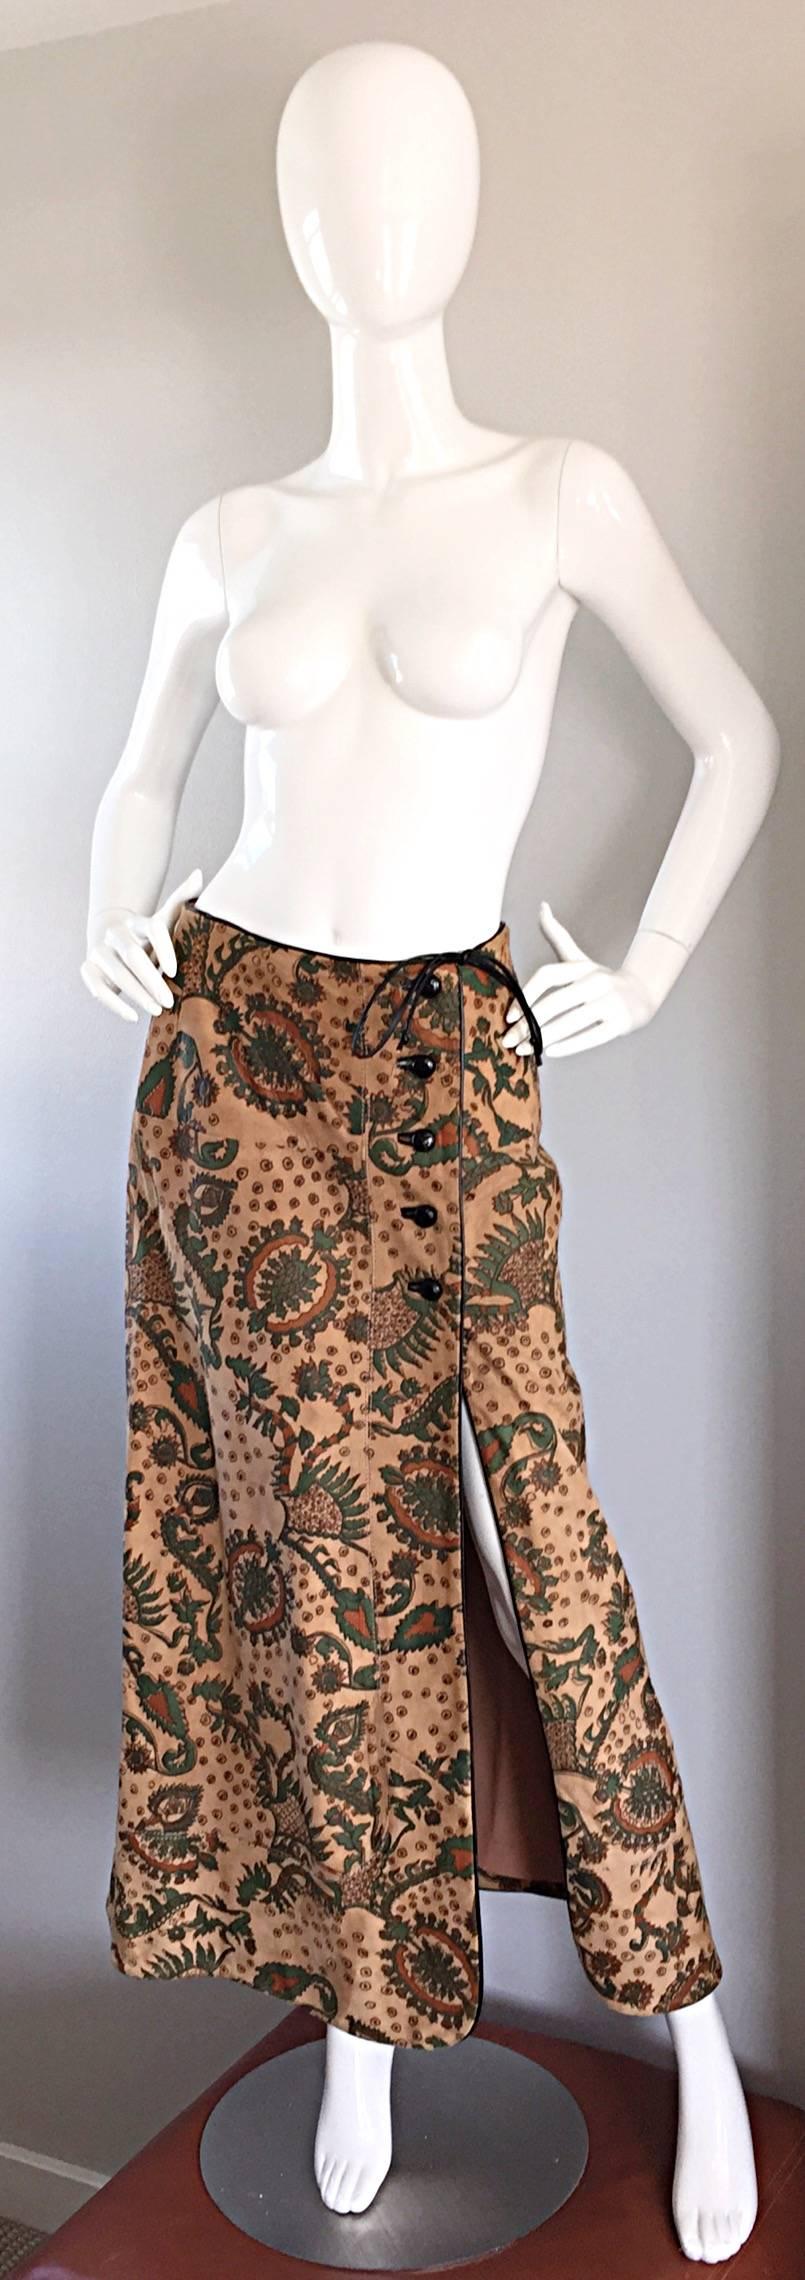 Rare Vintage Geoffrey Beene Bazaar Suede Leather Hand Painted Paisley Skirt  1